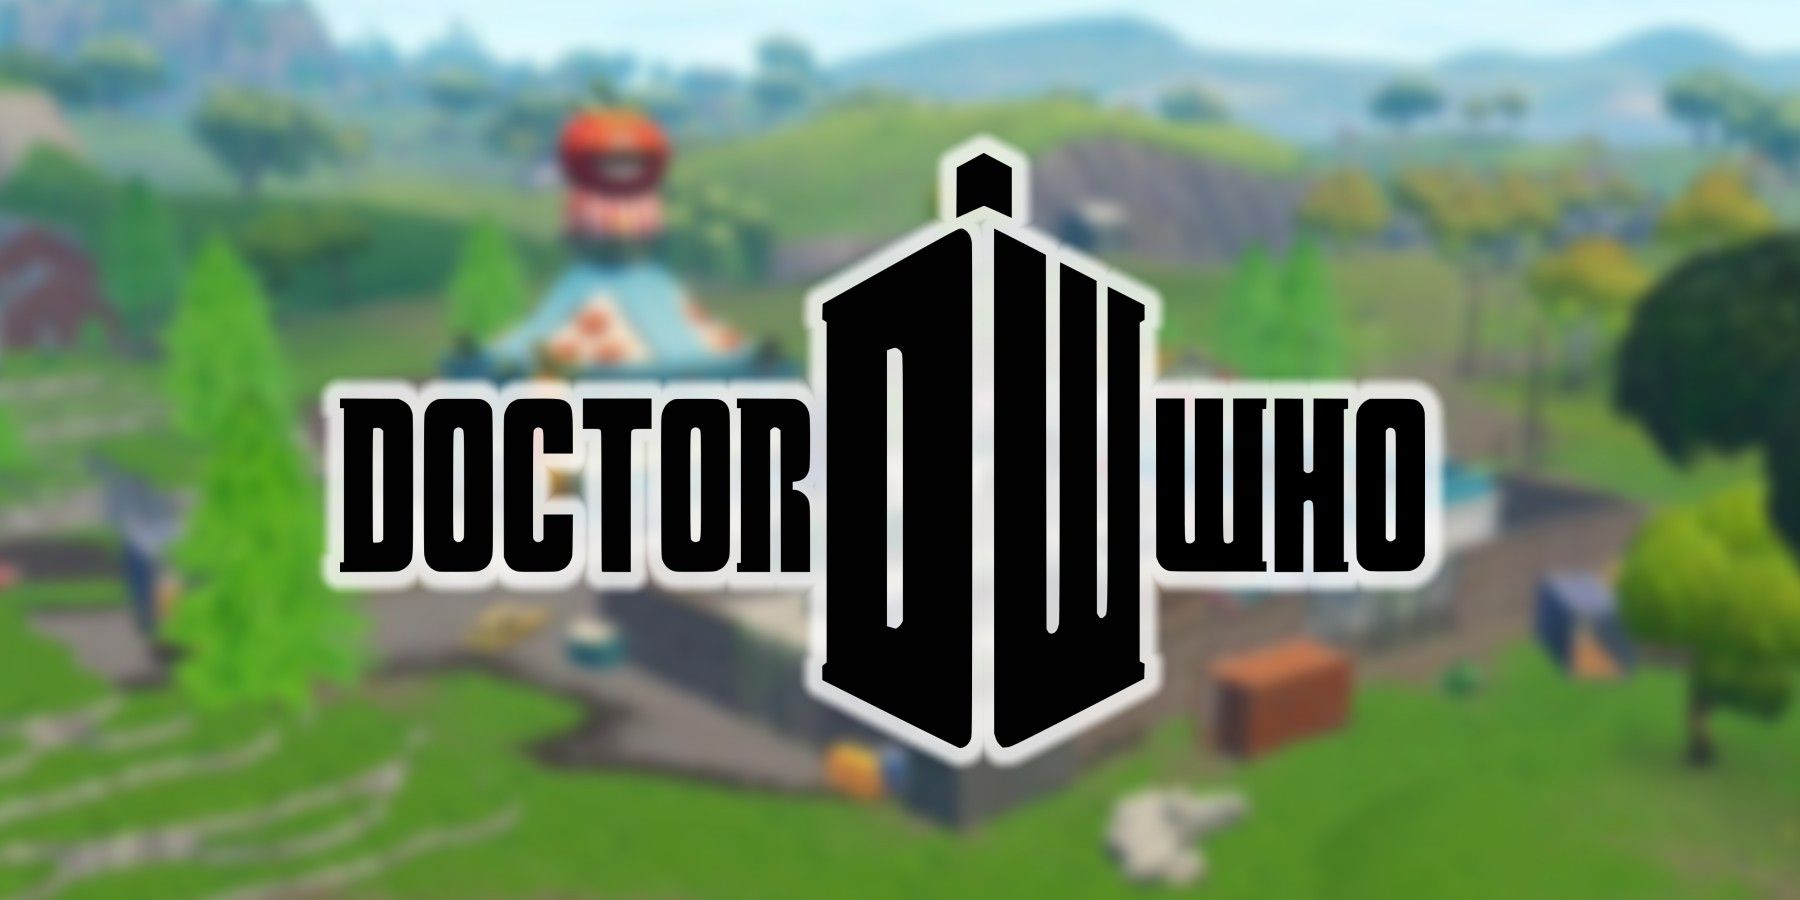 doctor-who-logo-fortnite-blurred-background